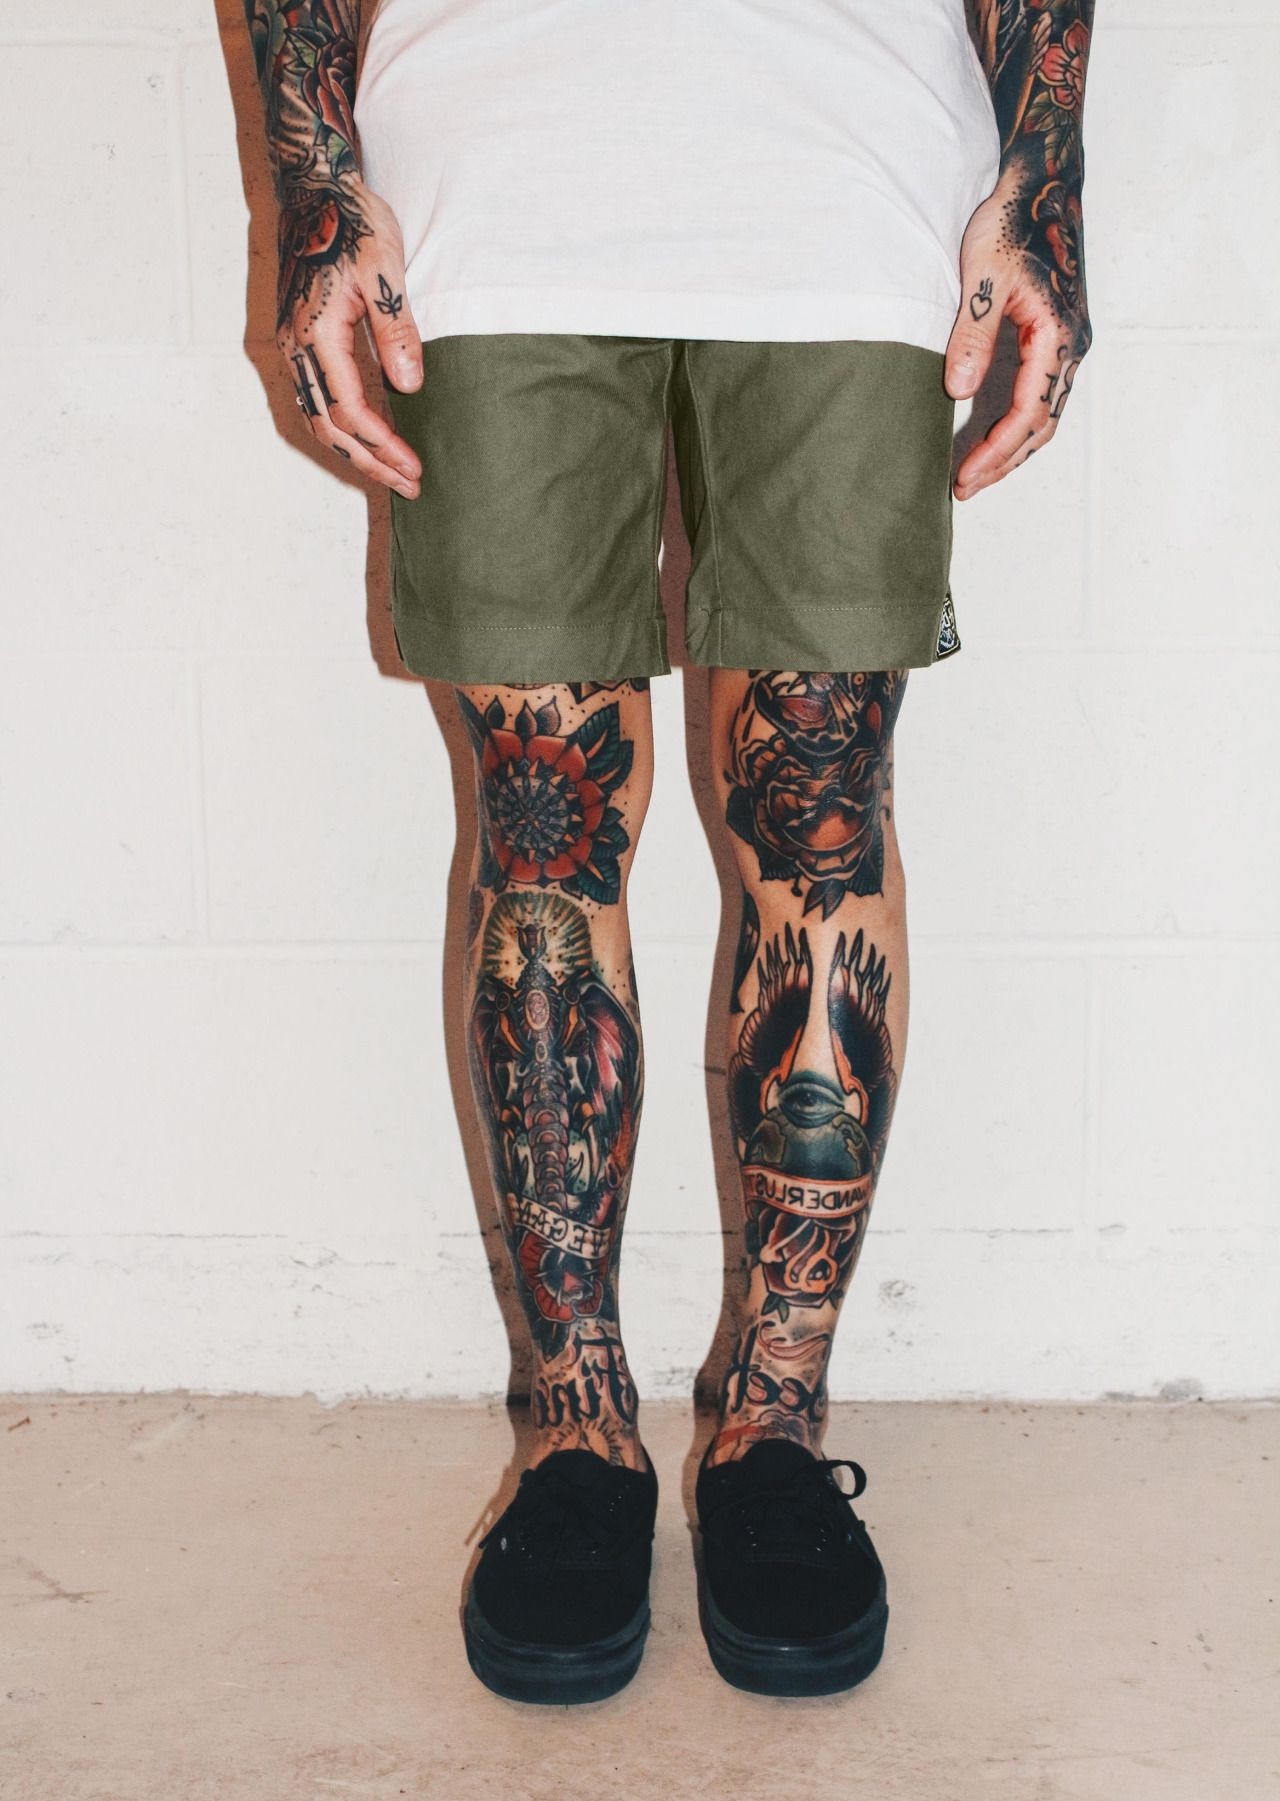 Tatouage jambe.